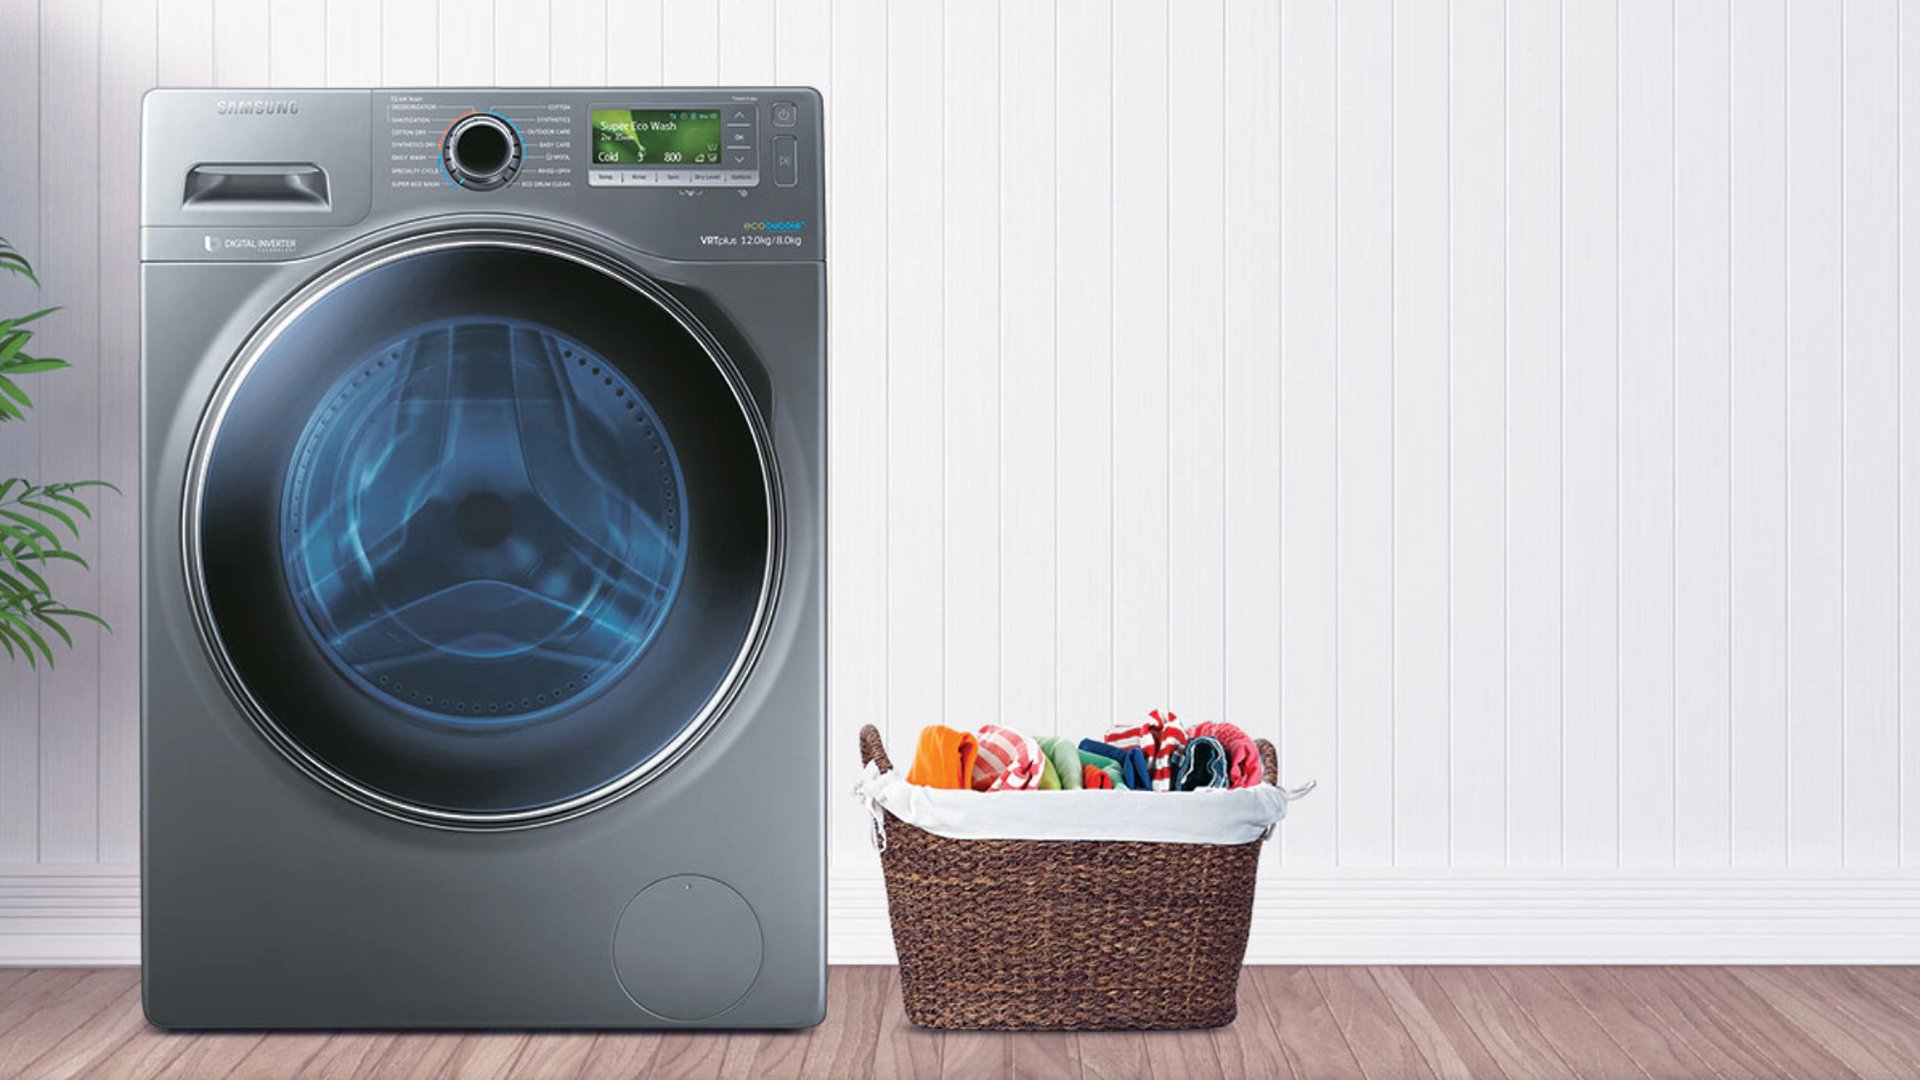 Samsung rivaling LG in high-capacity, AI washing machine segment - SamMobile